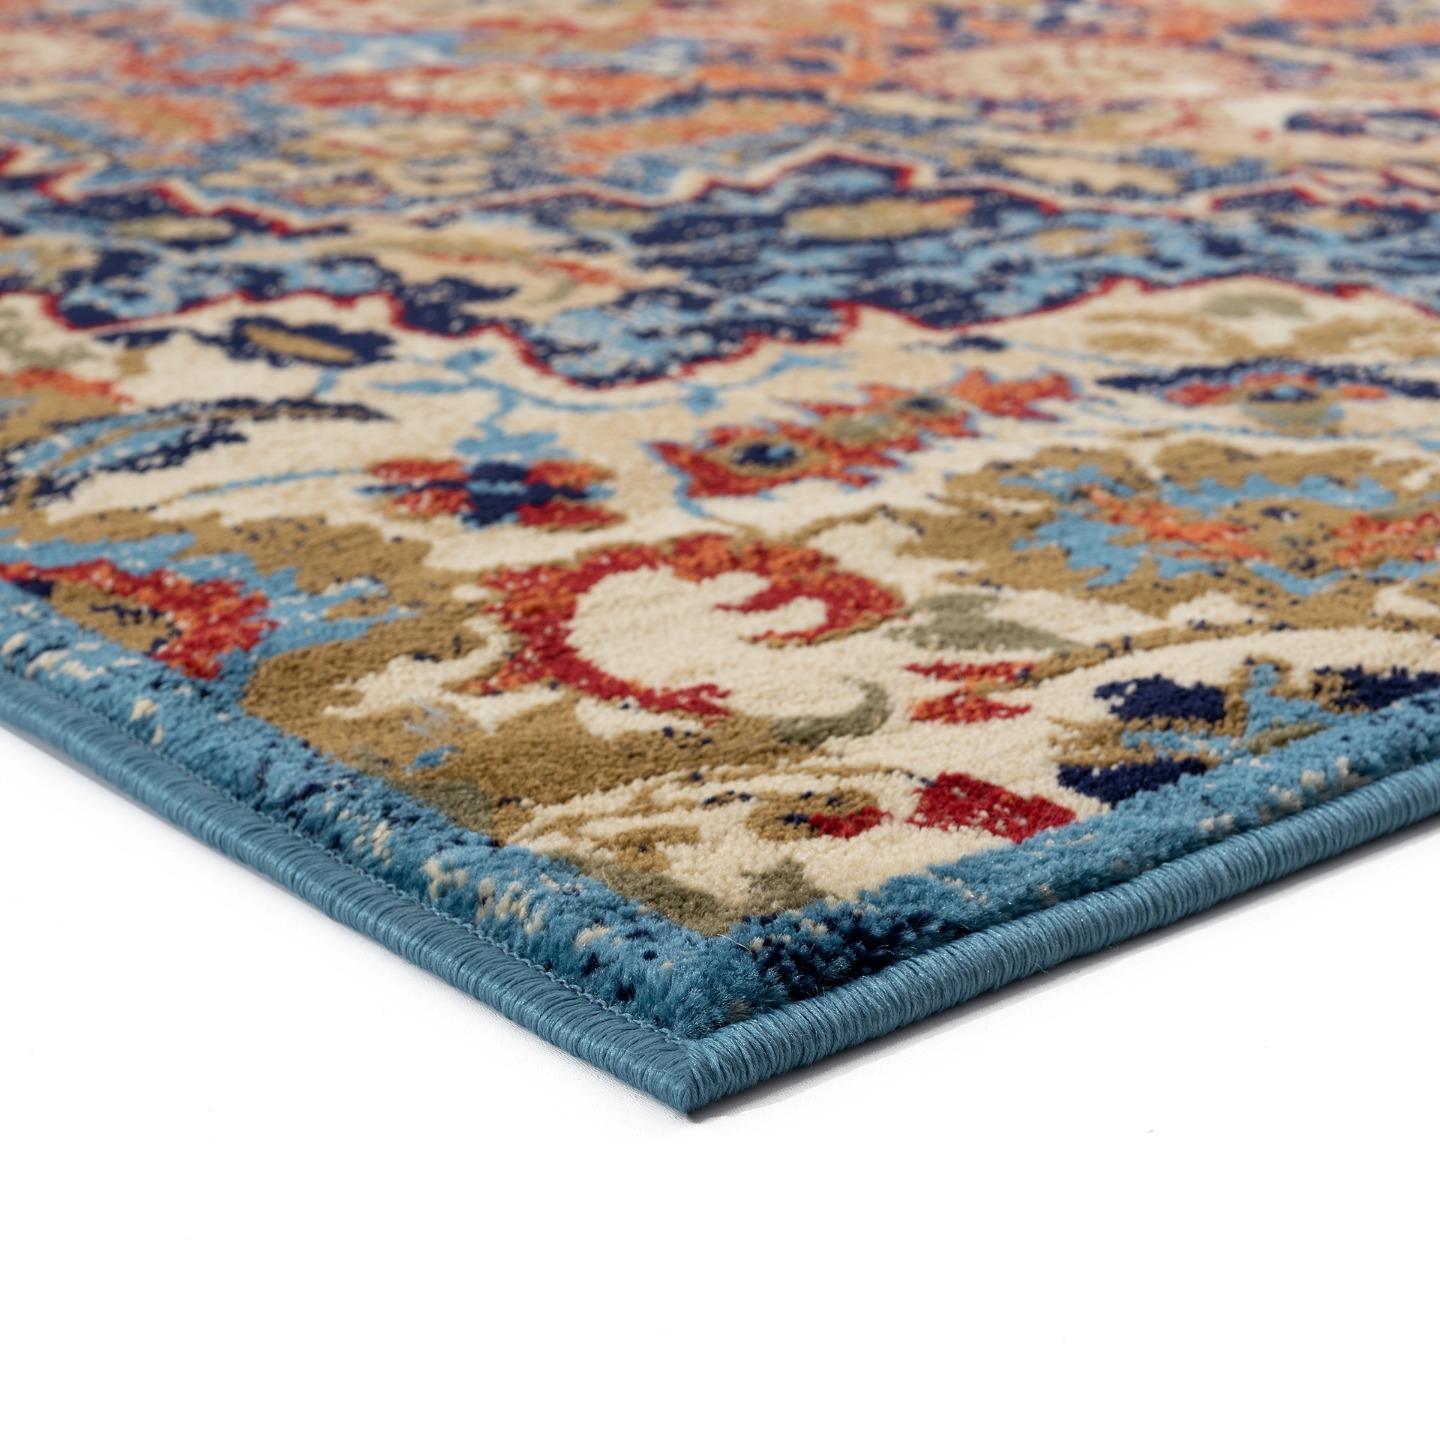 Luxe Weavers Oriental Blue 8x10 Vintage Area Rug, Southwestern Geometric Carpet - image 4 of 6